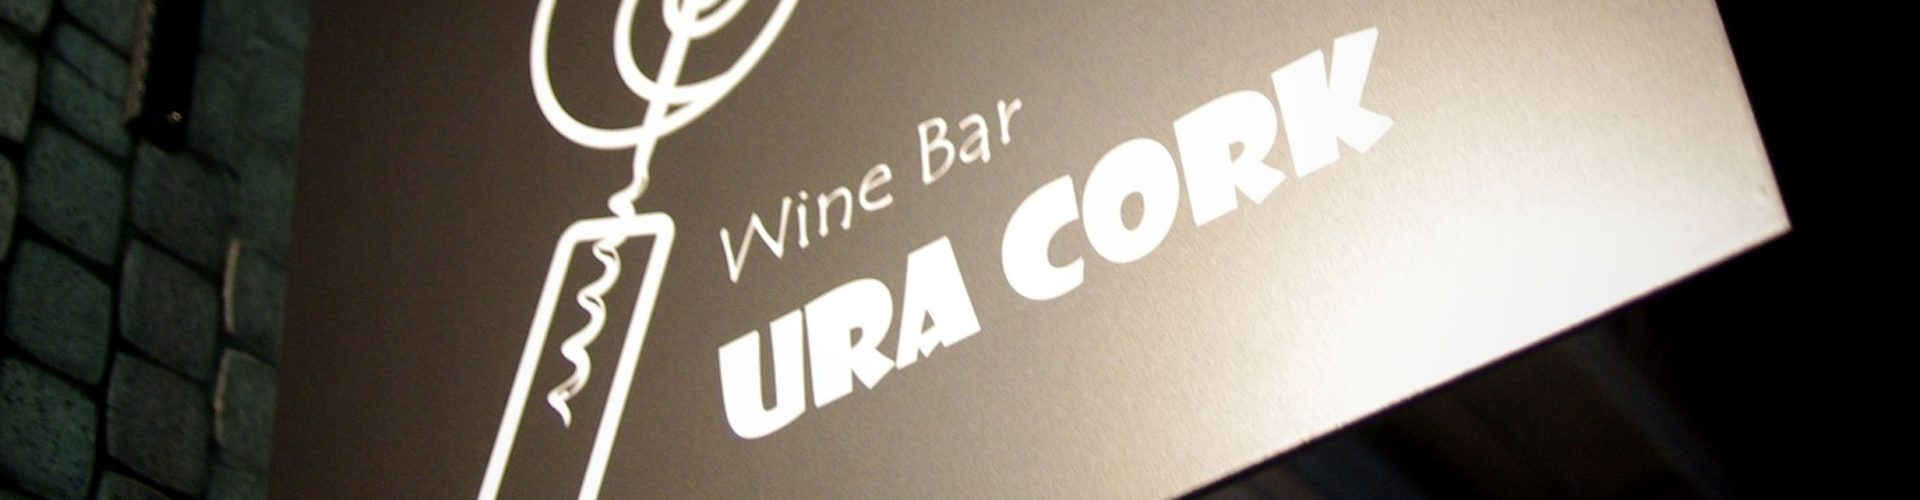 Wine Bar URACORK、この週末も元気に営業します♪